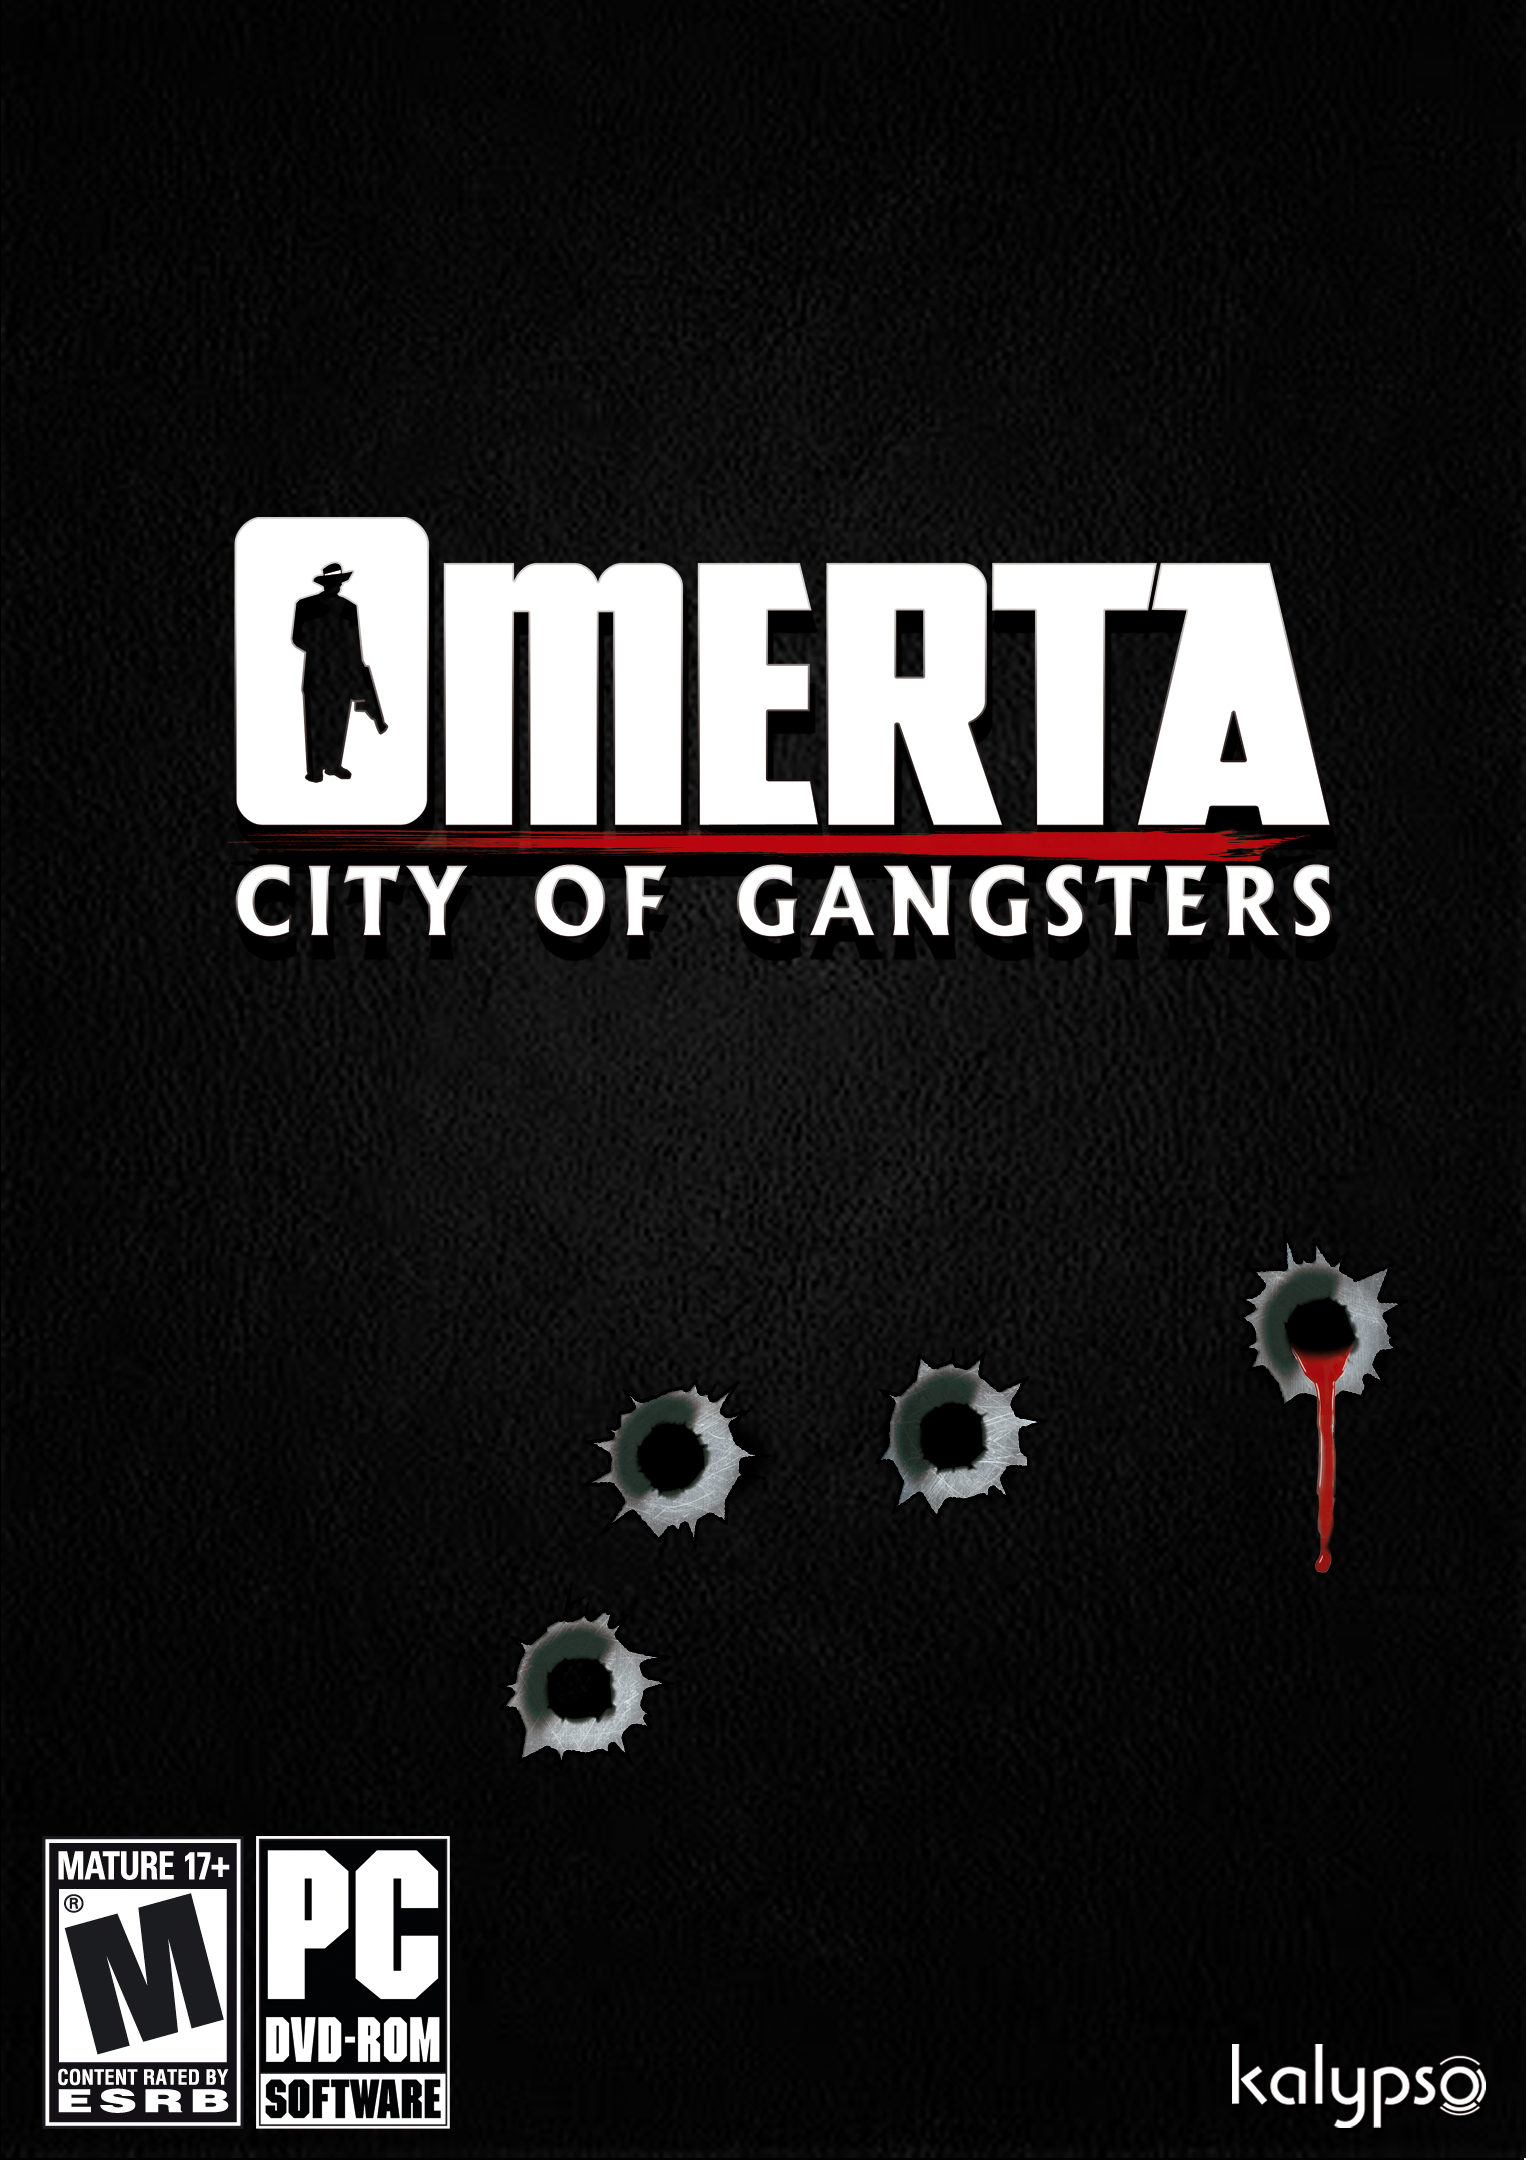 Gangsters 2 Free Download Full Version Deutsch